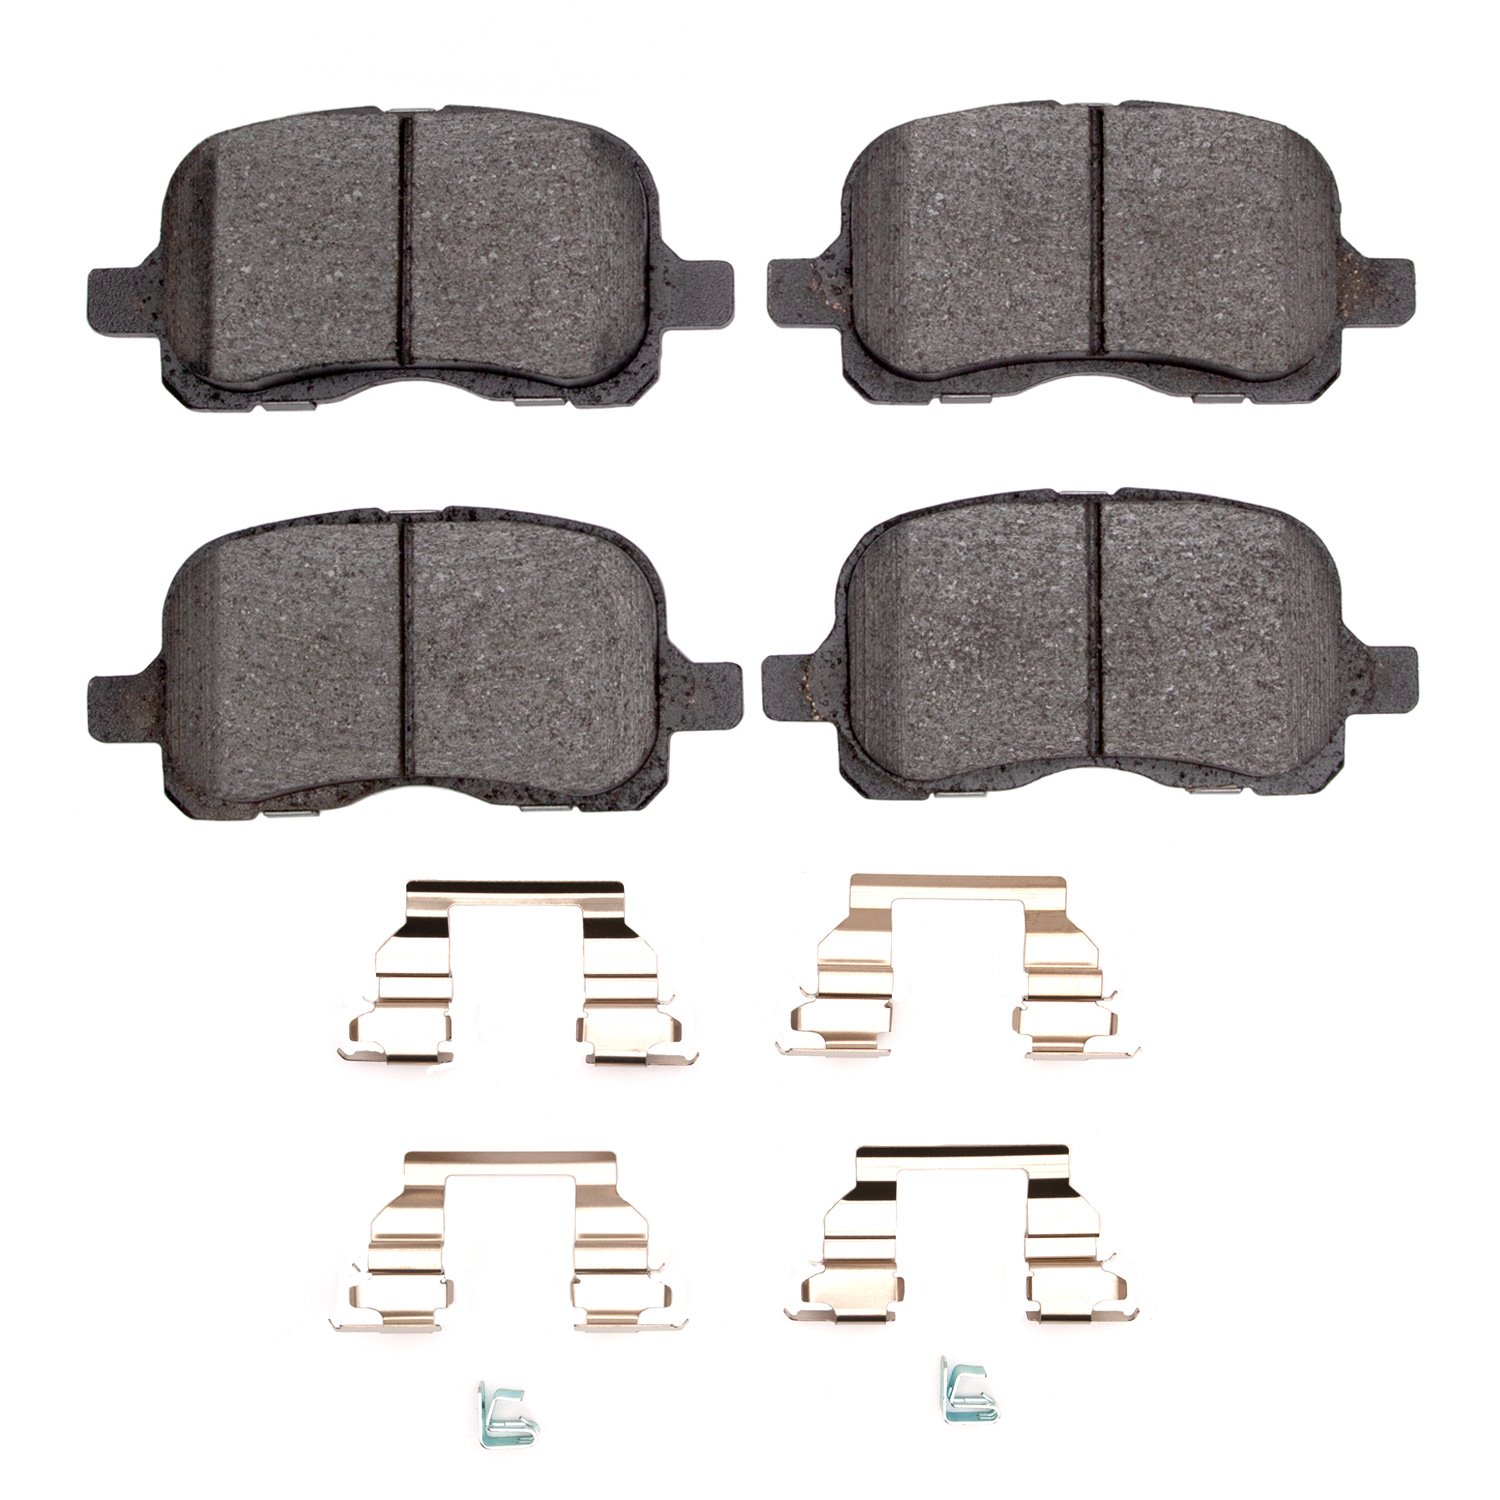 1310-0741-01 3000-Series Ceramic Brake Pads & Hardware Kit, 1998-2002 Multiple Makes/Models, Position: Front